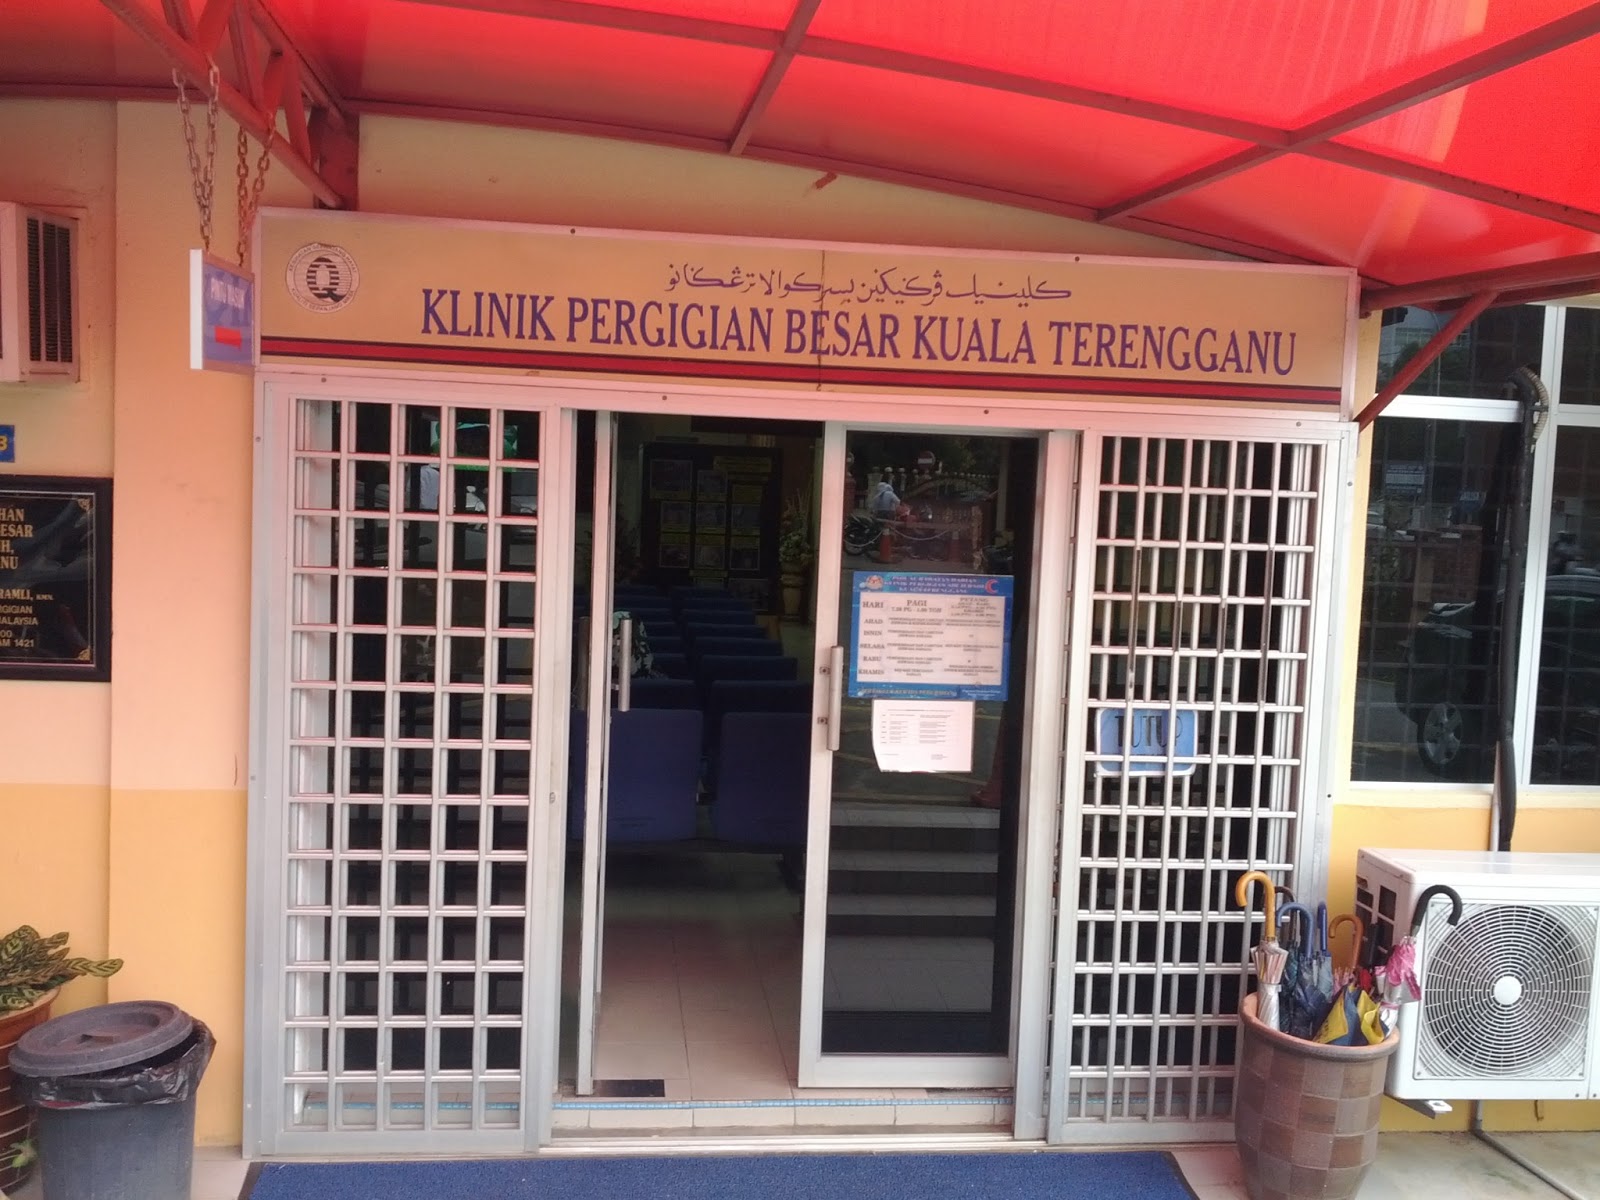 Healthy Mouth For All: Klinik Pergigian Daerah Kuala Terengganu (Part II)